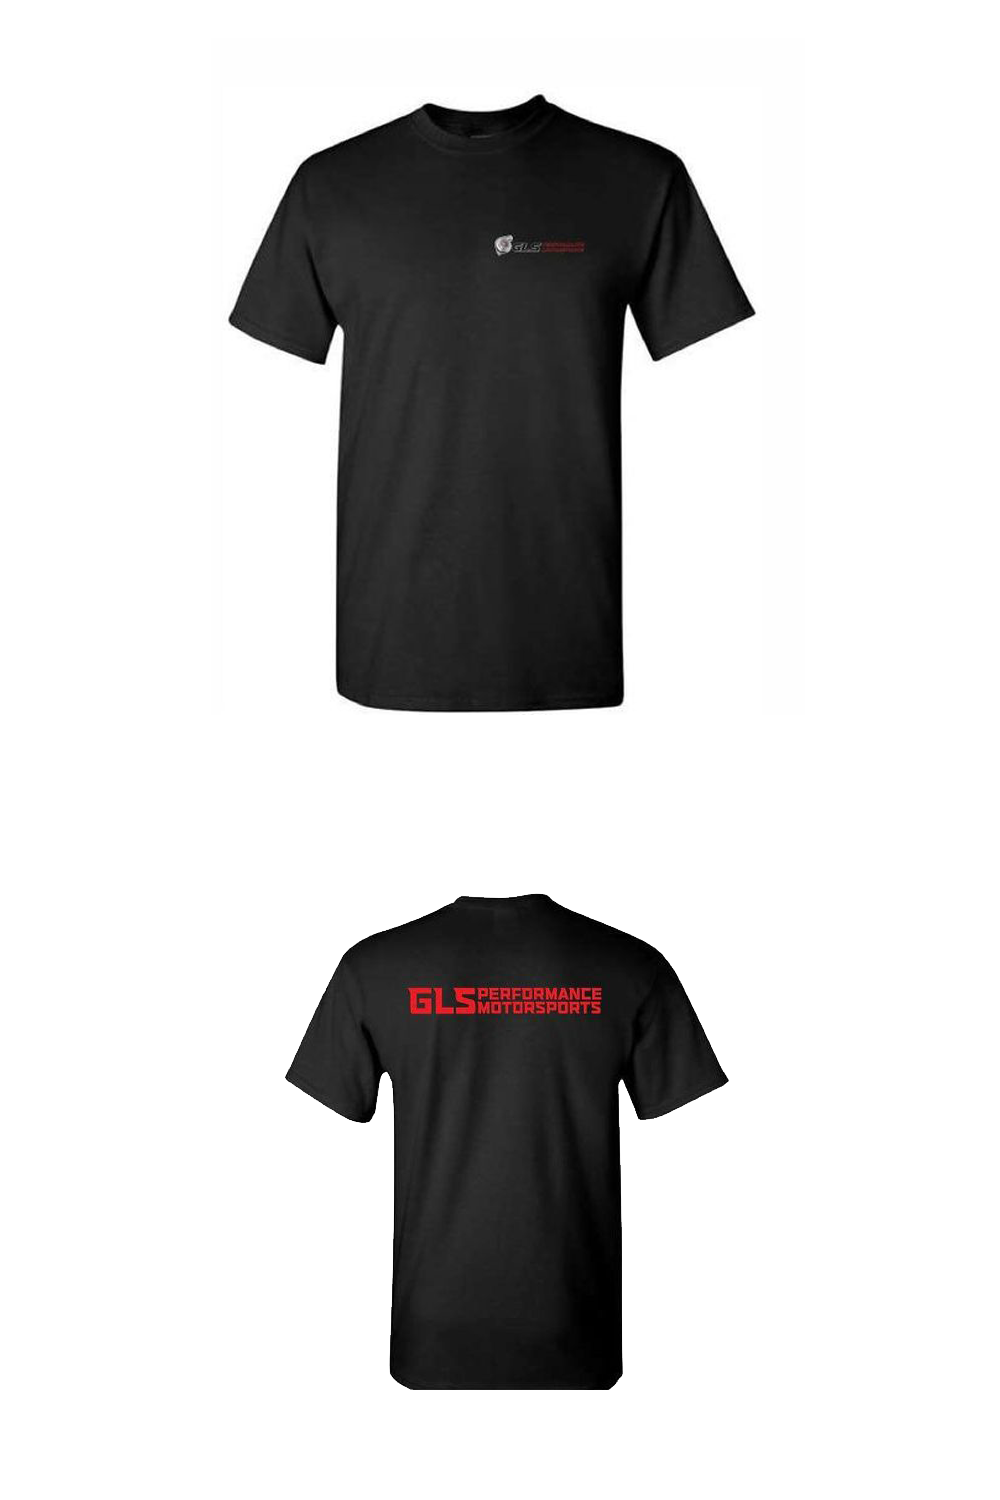 GLS Performance Motorsports Short Sleeve T-Shirt (RED)